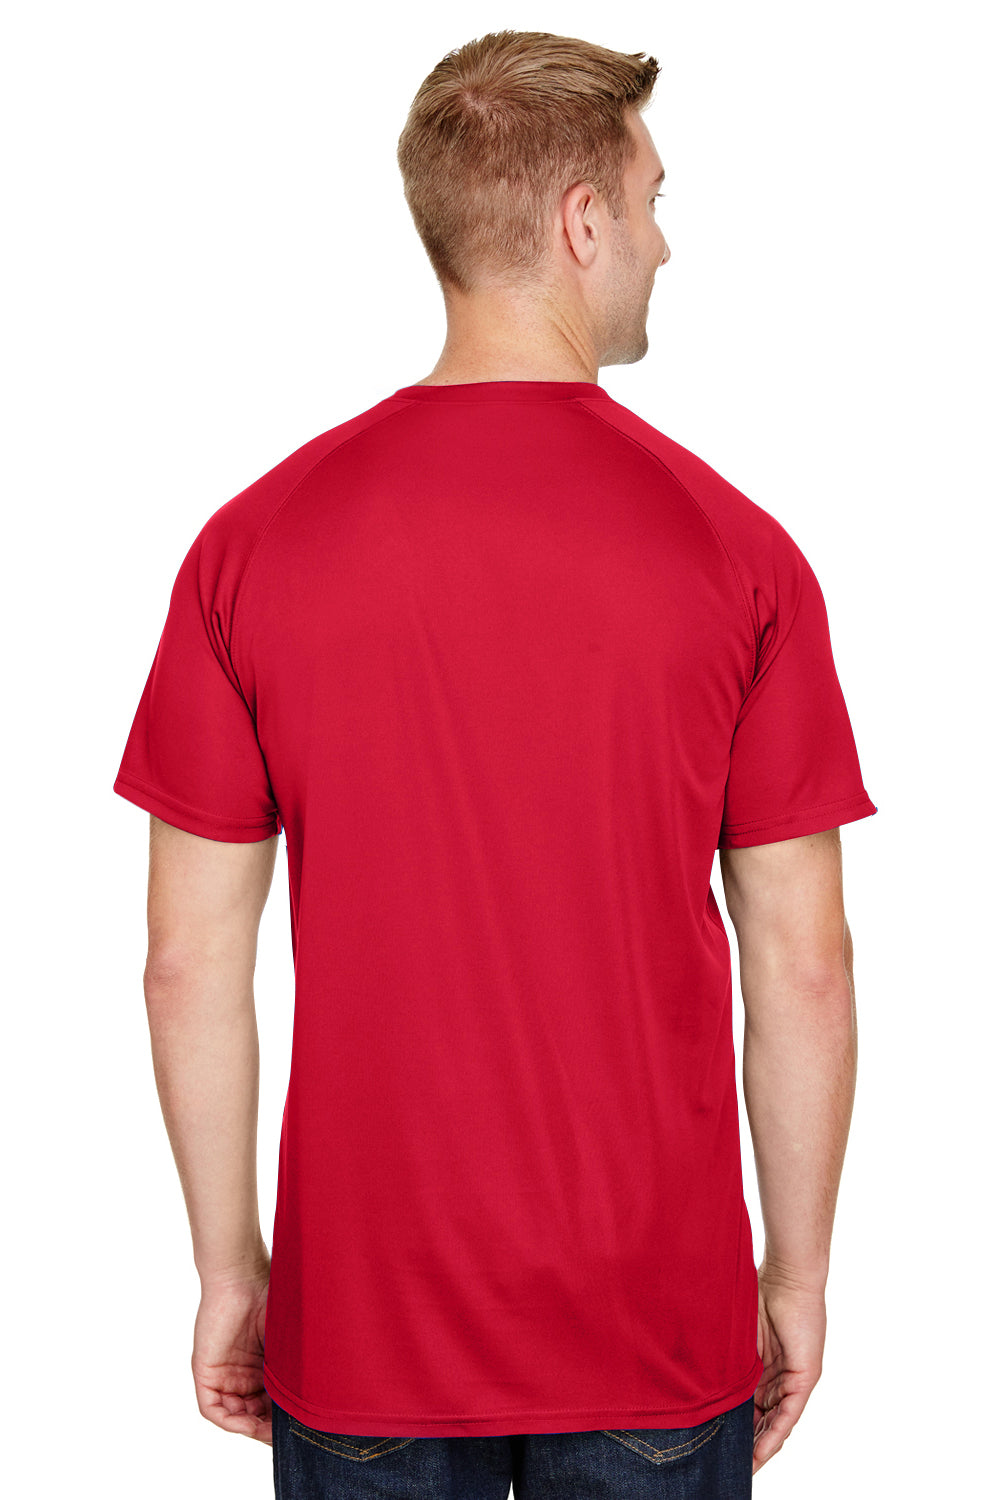 Augusta Sportswear AG1565 Mens Attain 2 Moisture Wicking Button Short Sleeve Baseball Jersey Red Model Back